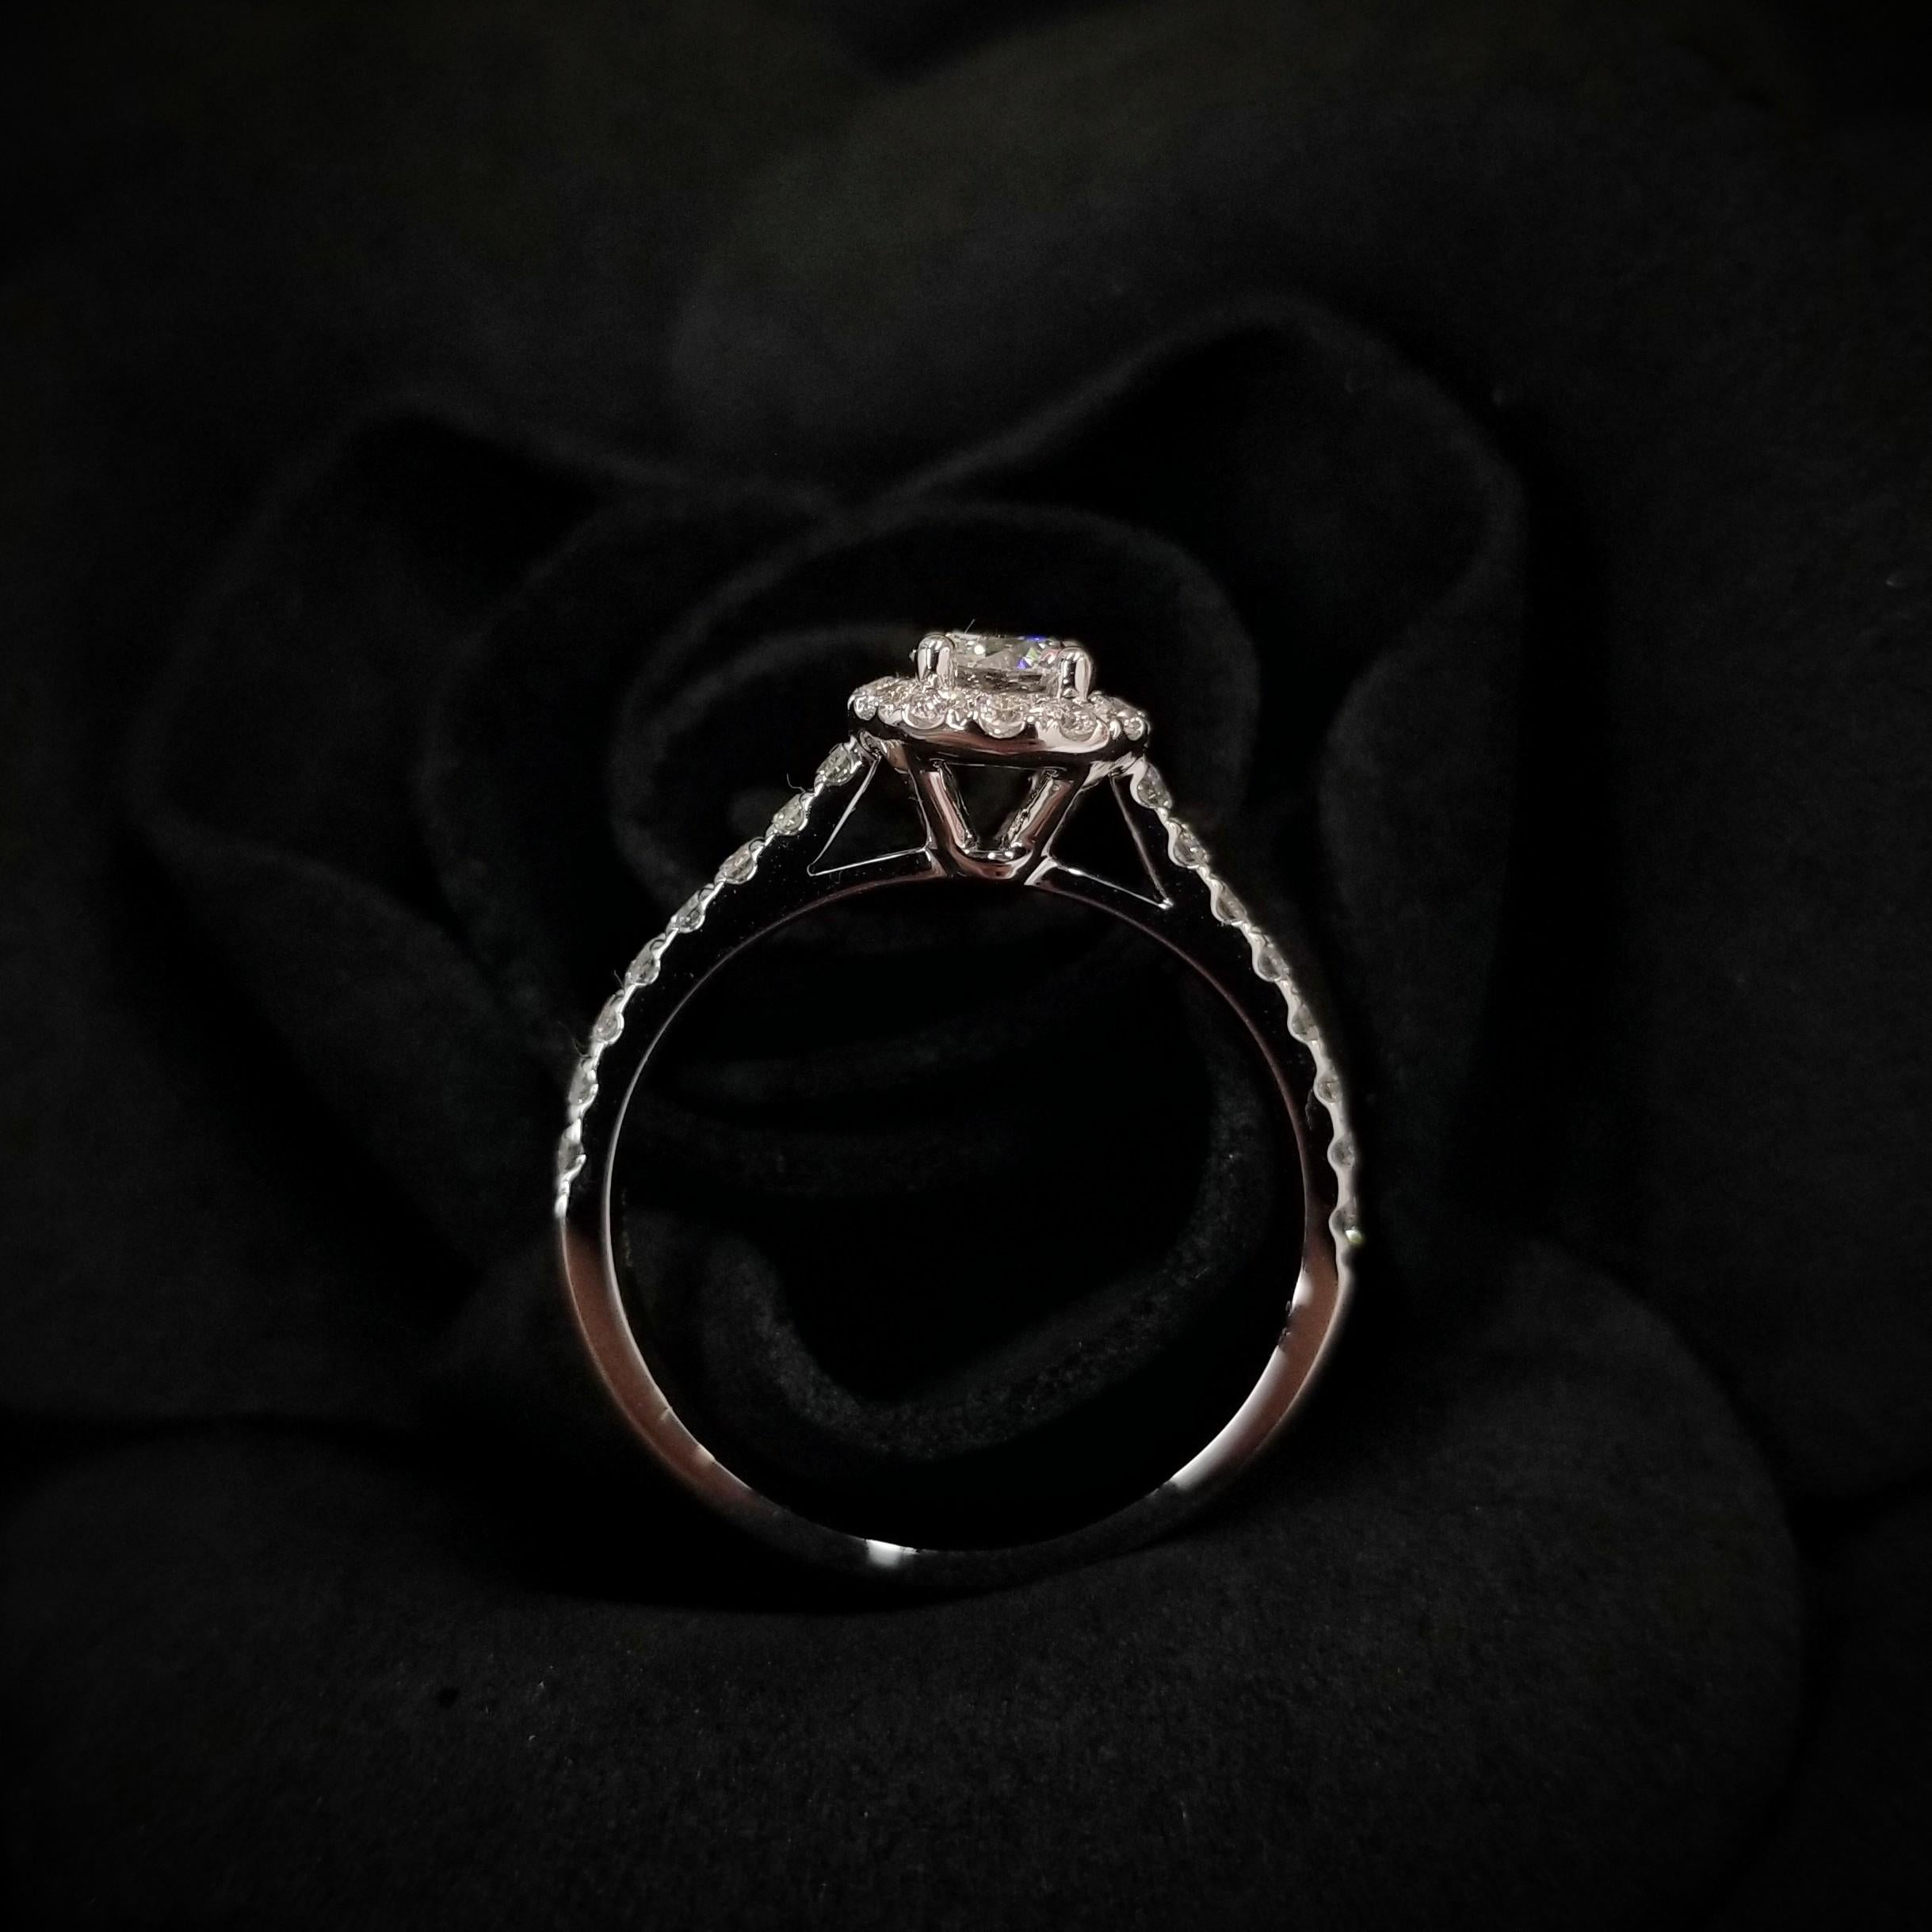 Women's GIA Certified 0.31 Carat GIA Diamond Ring in 18K White Gold For Sale